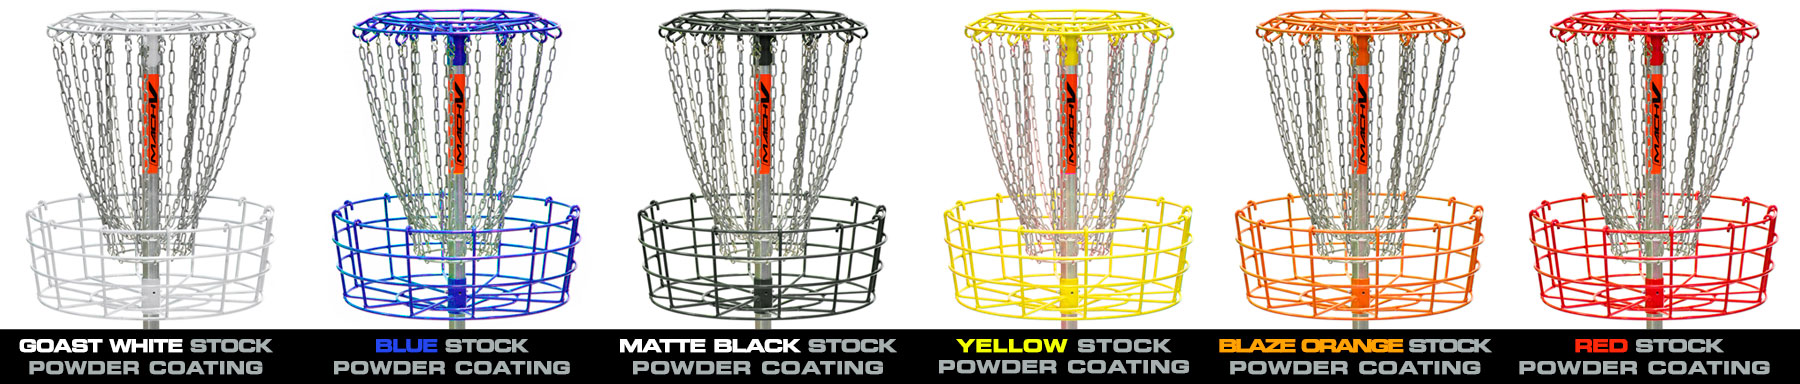 DGA stock powder coated basket color options